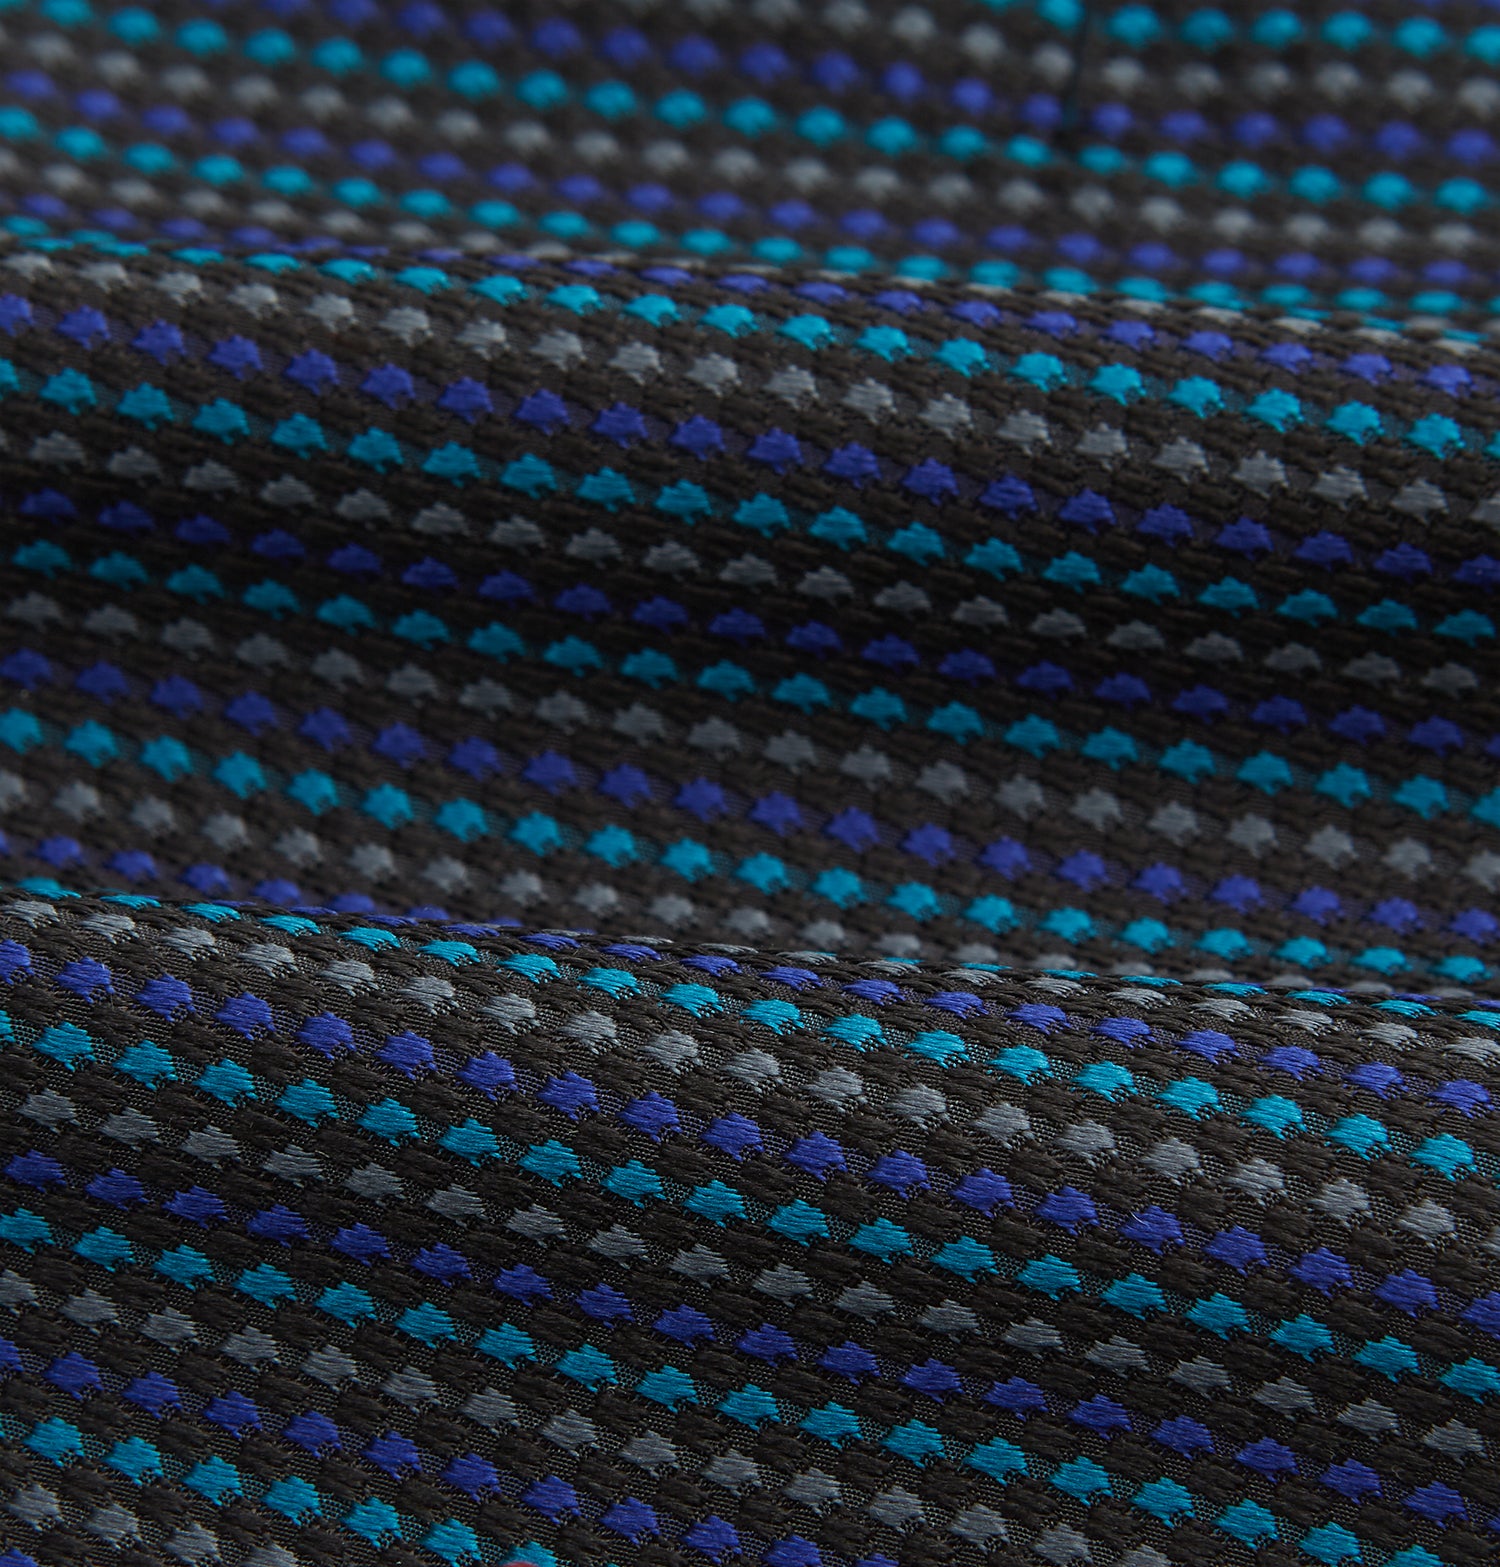 Navy Multi Silk Cravat